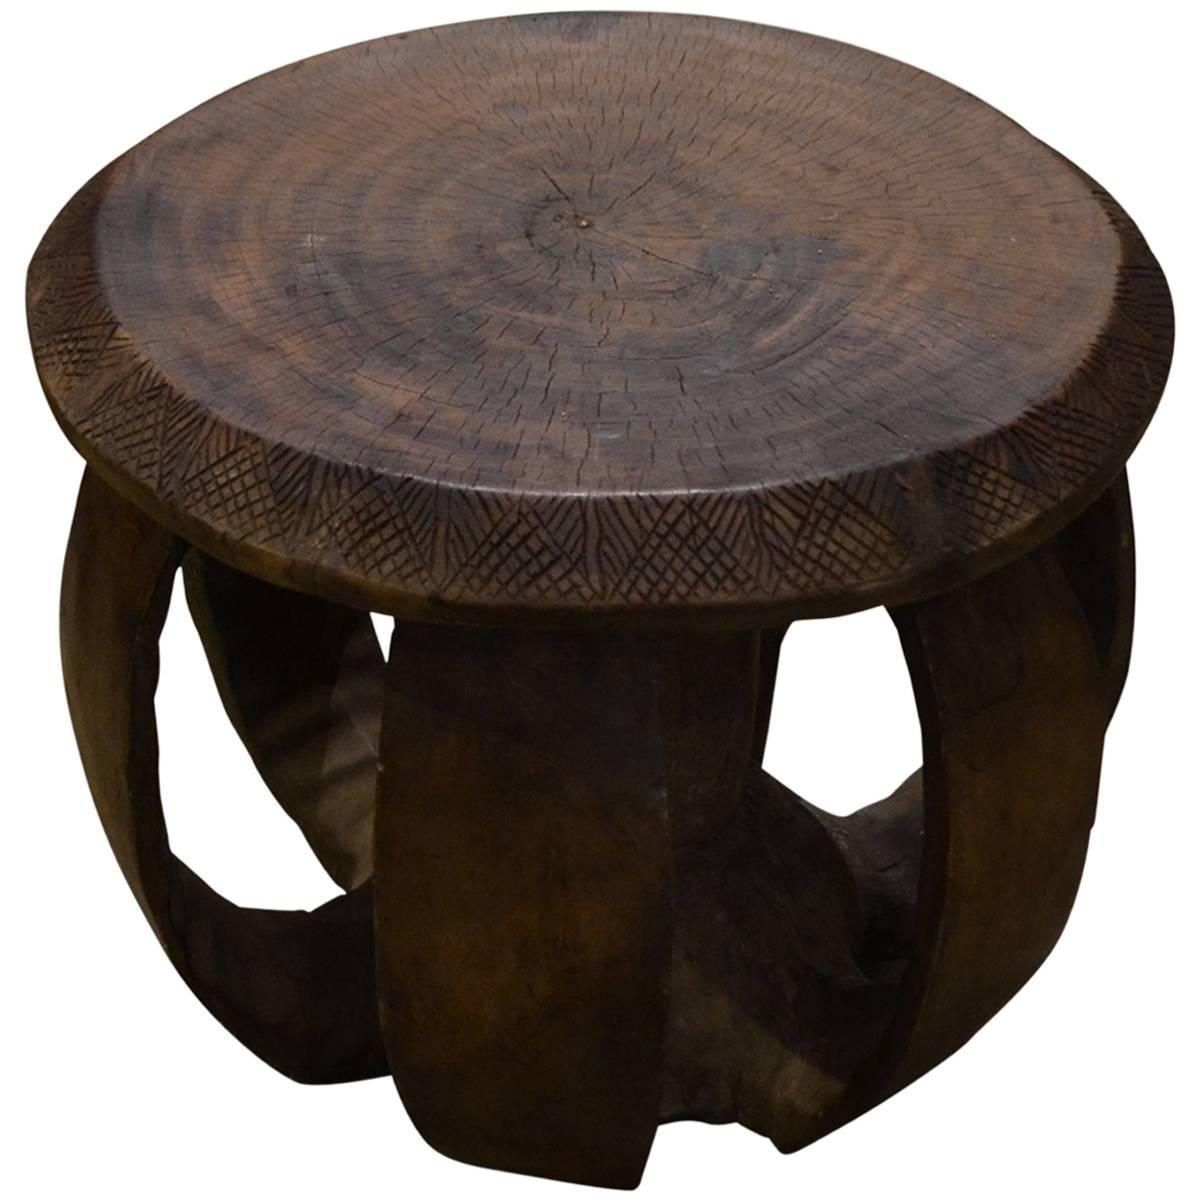 Andrianna Shamaris African Mahogany Wood Side Table or Stool